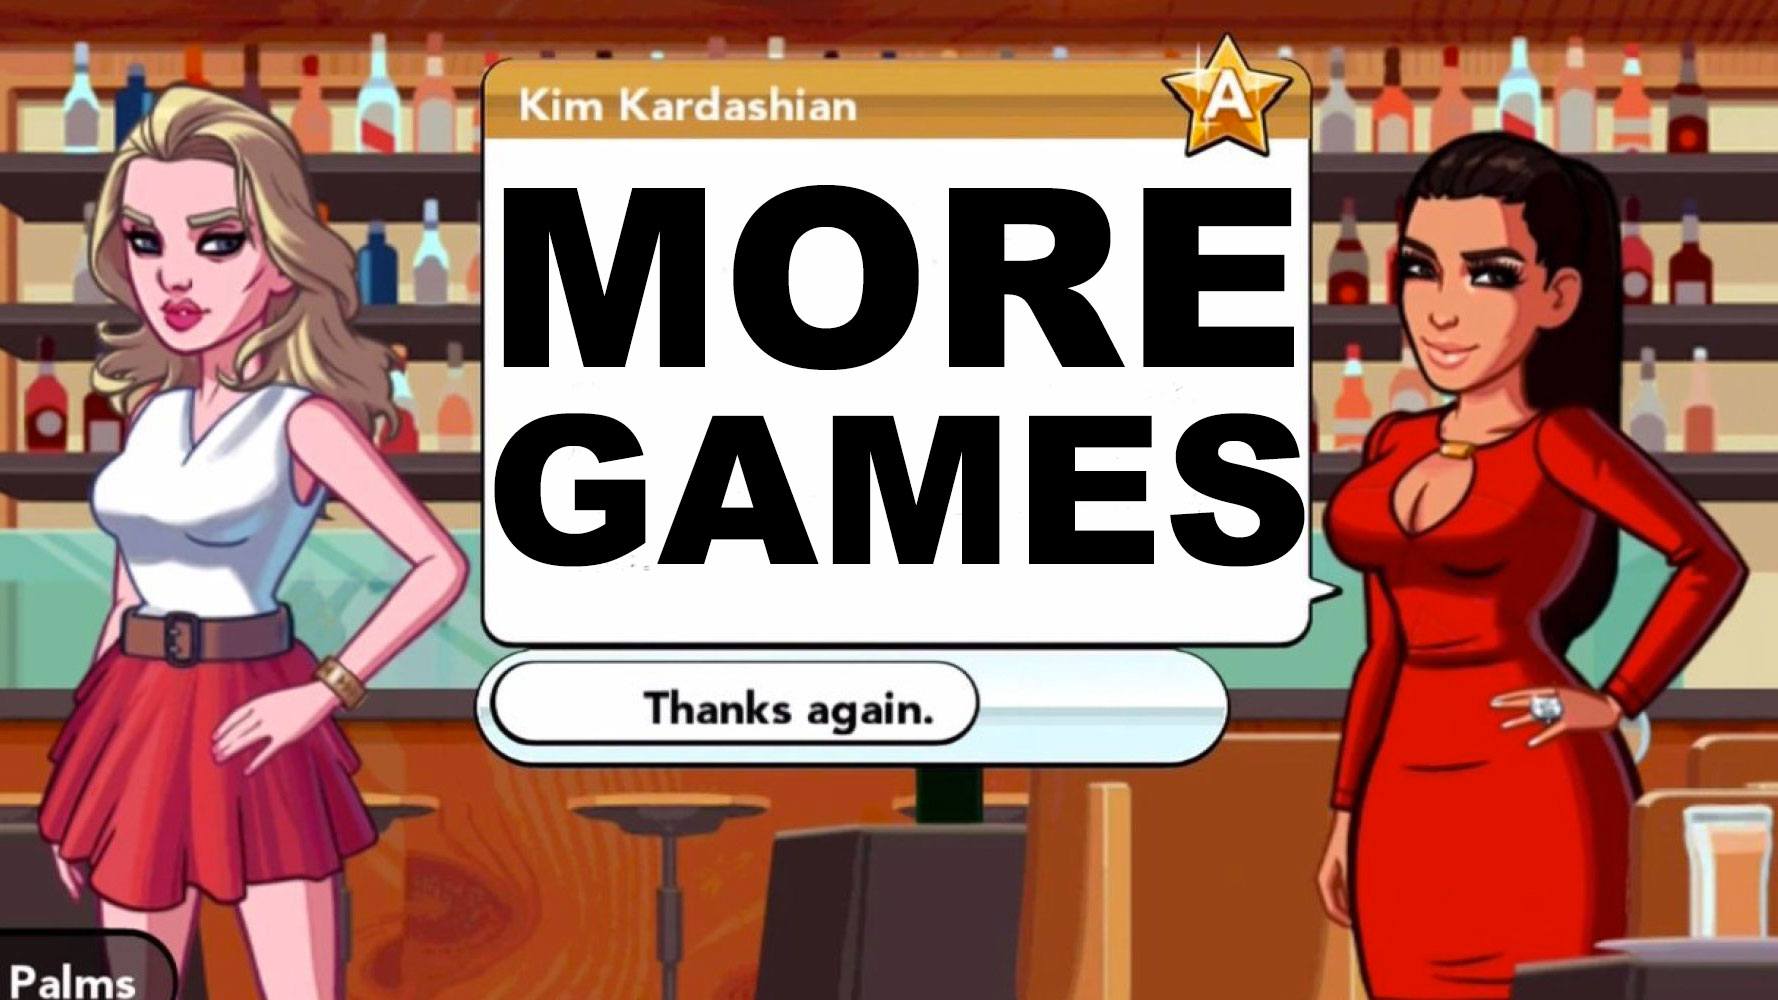 Are Glu Making More Kim Kardashian Games?